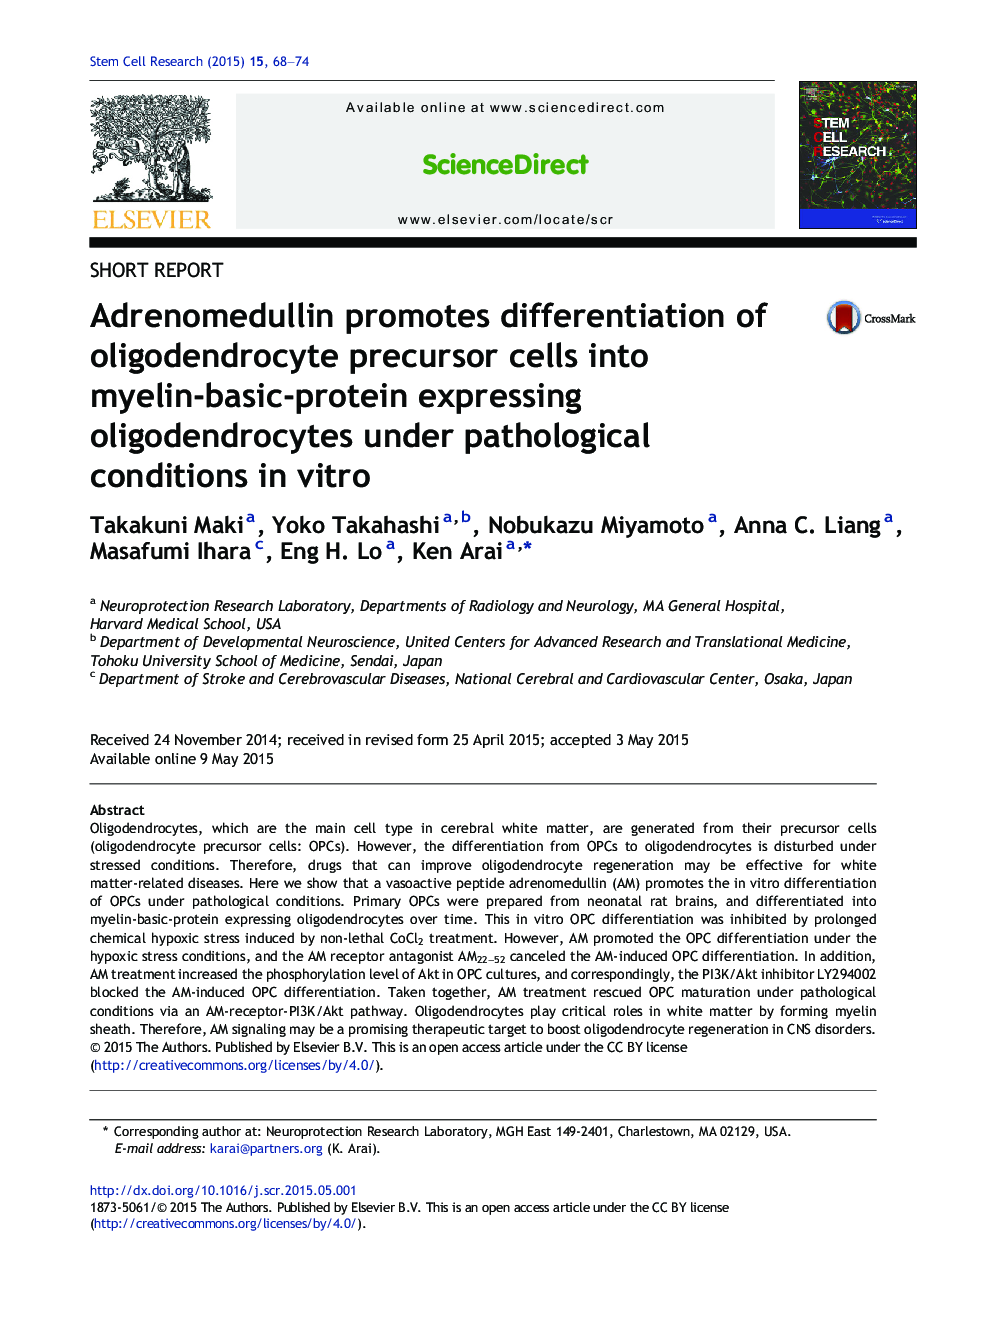 Adrenomedullin promotes differentiation of oligodendrocyte precursor cells into myelin-basic-protein expressing oligodendrocytes under pathological conditions in vitro